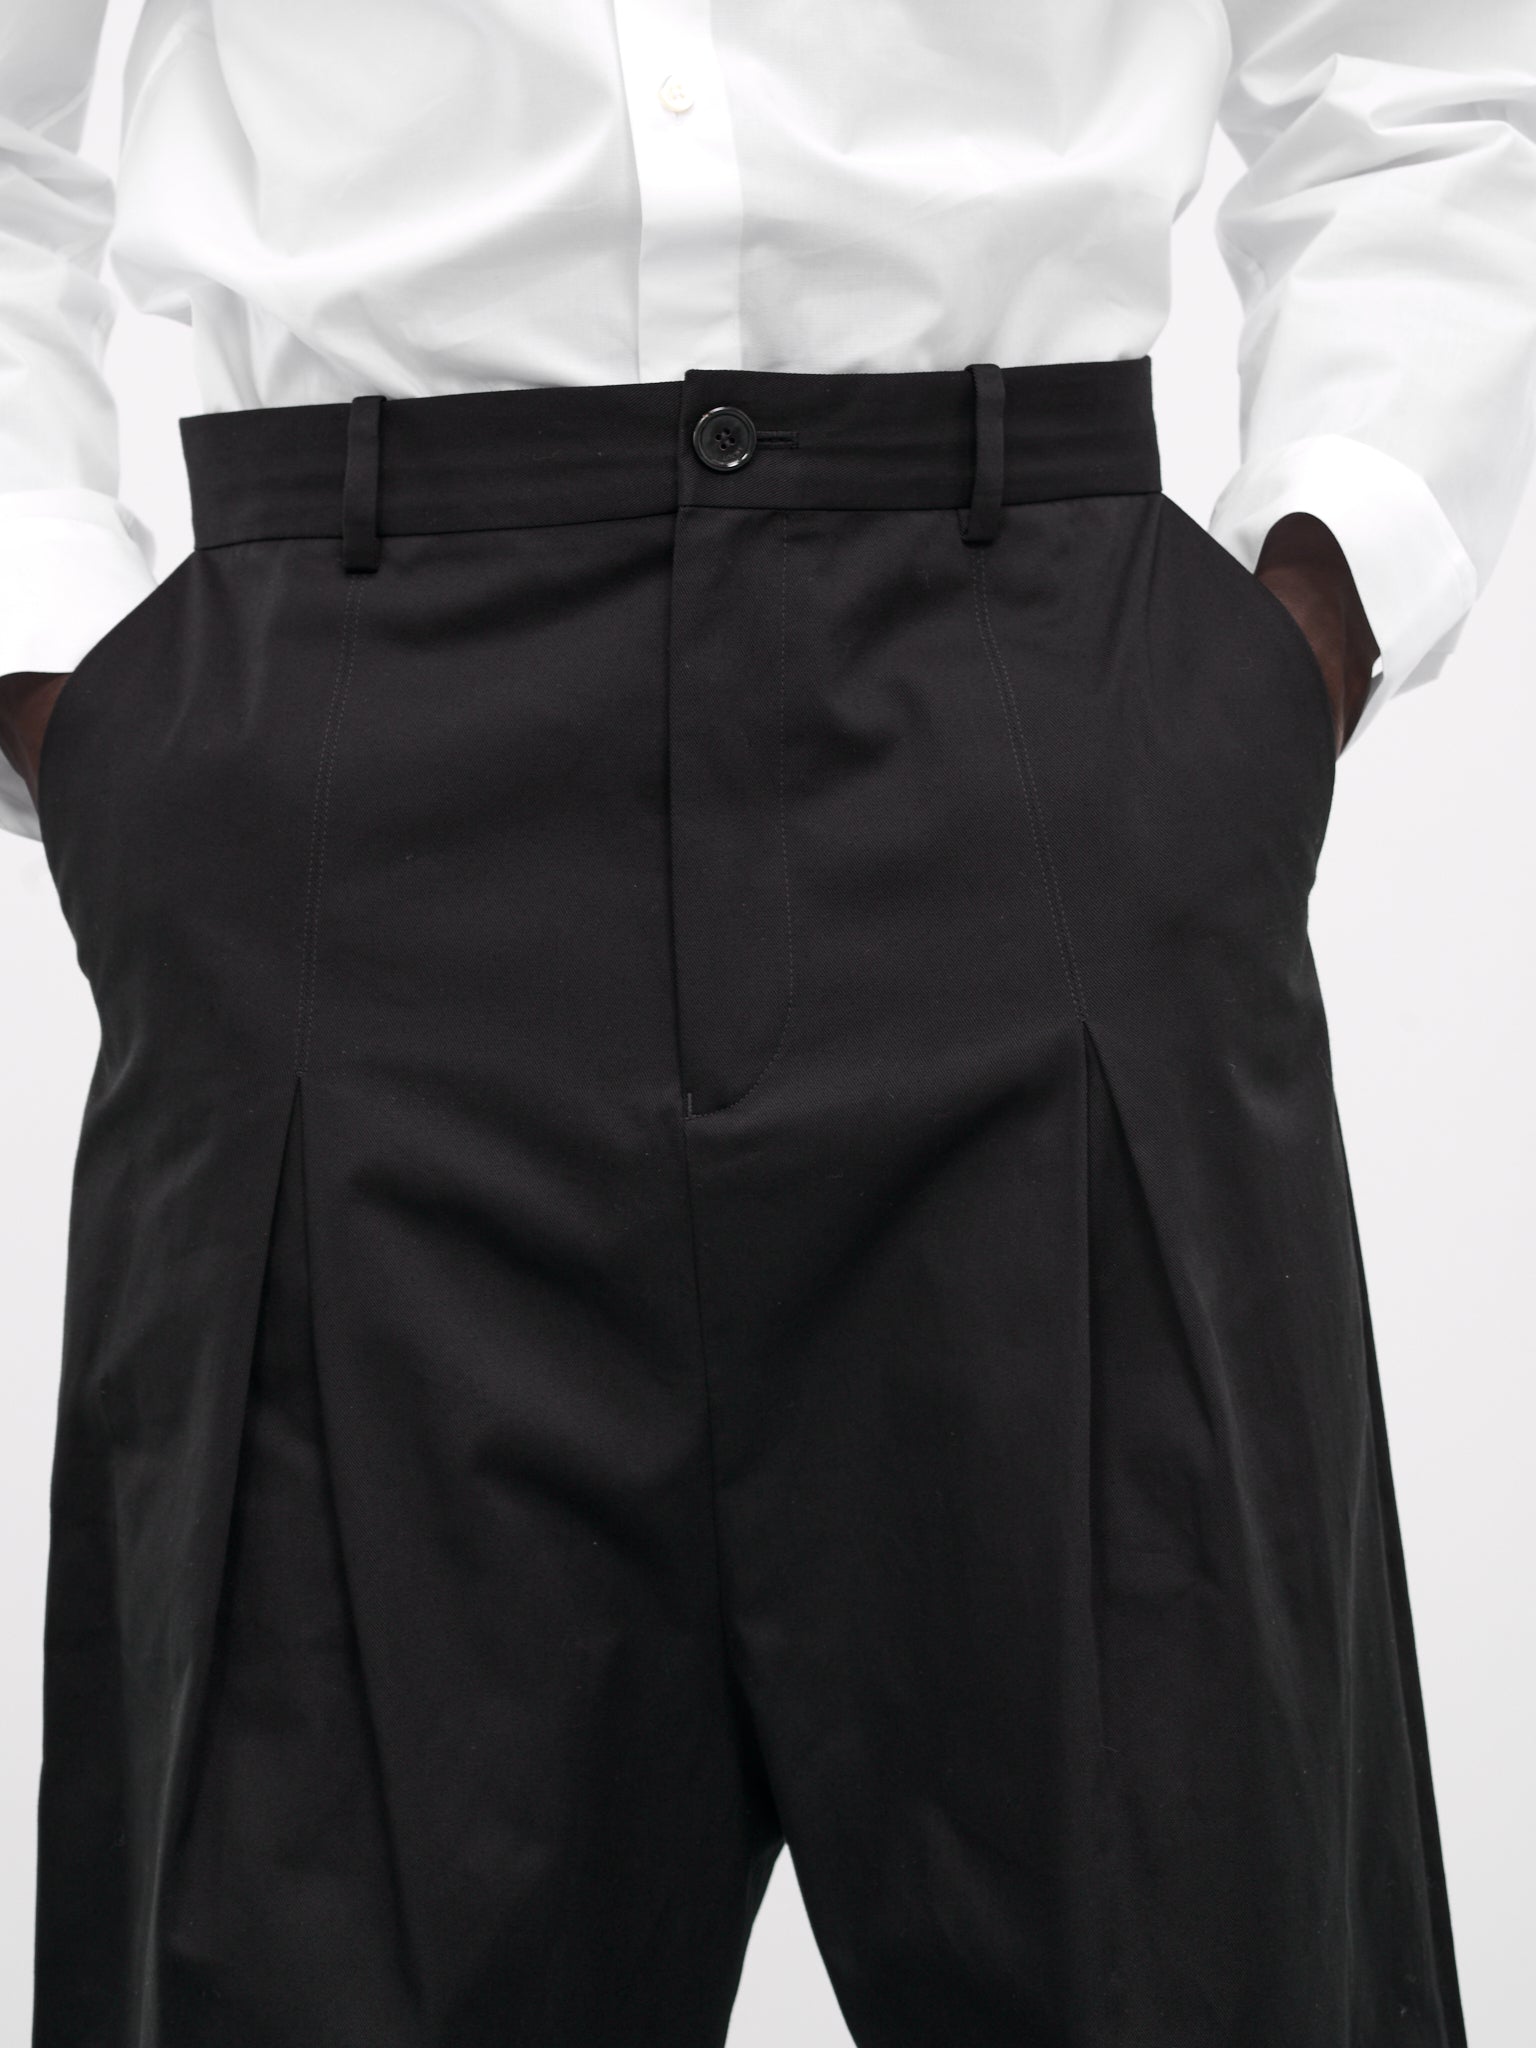 LOEWE Trousers | H. Lorenzo - detail 1